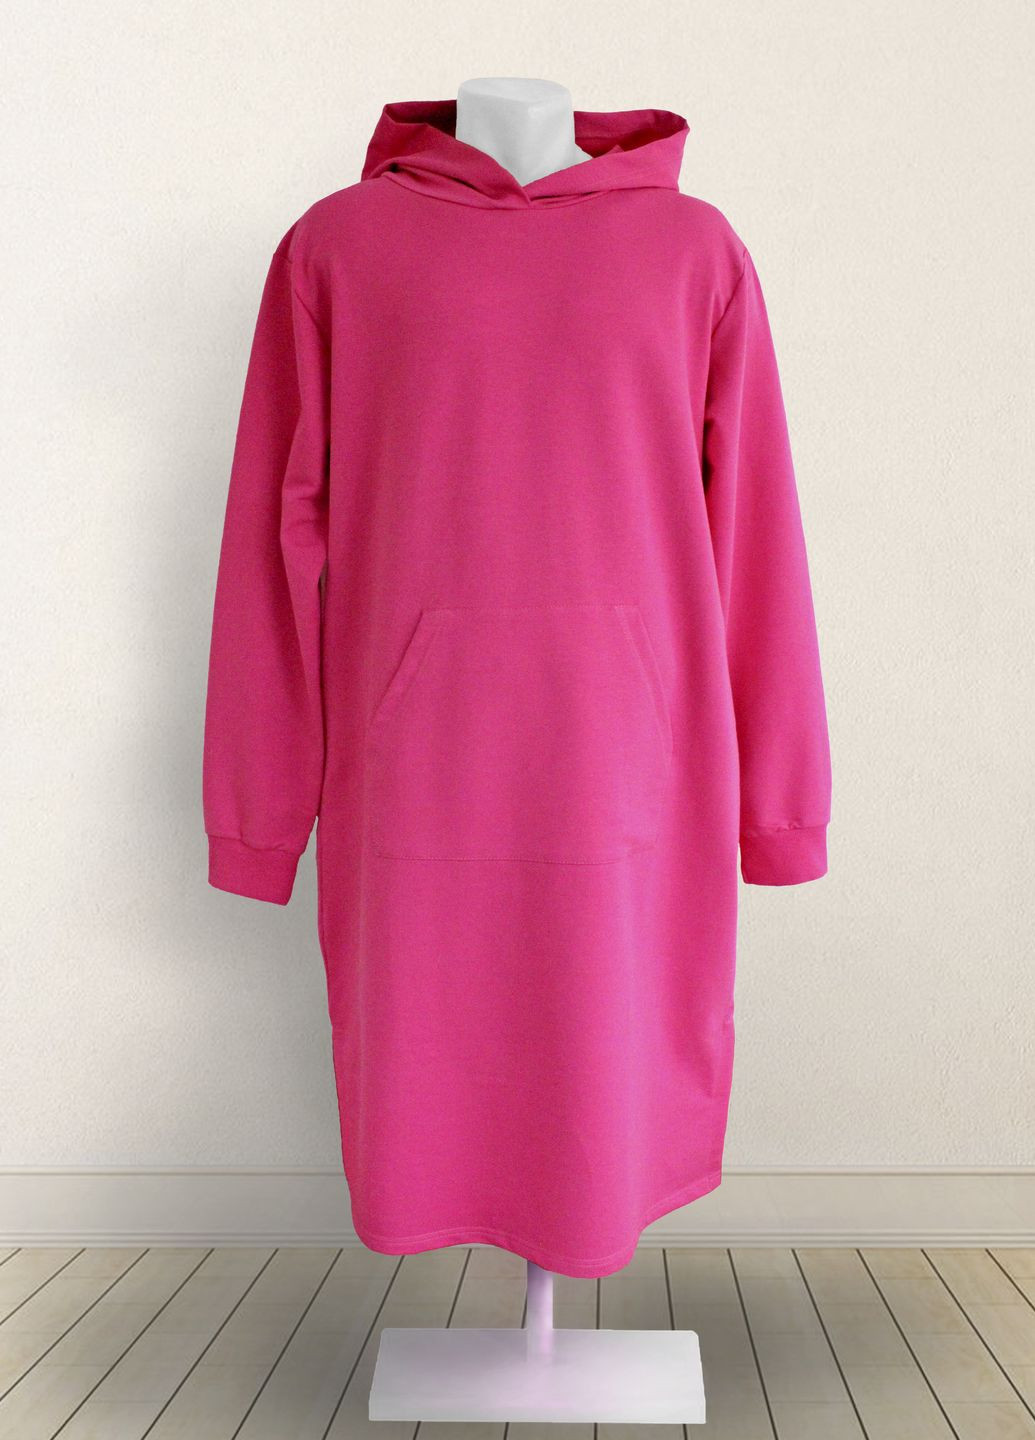 Худи-платье Ж560-13 малиновое Malta ж560/1-13 (260636305)